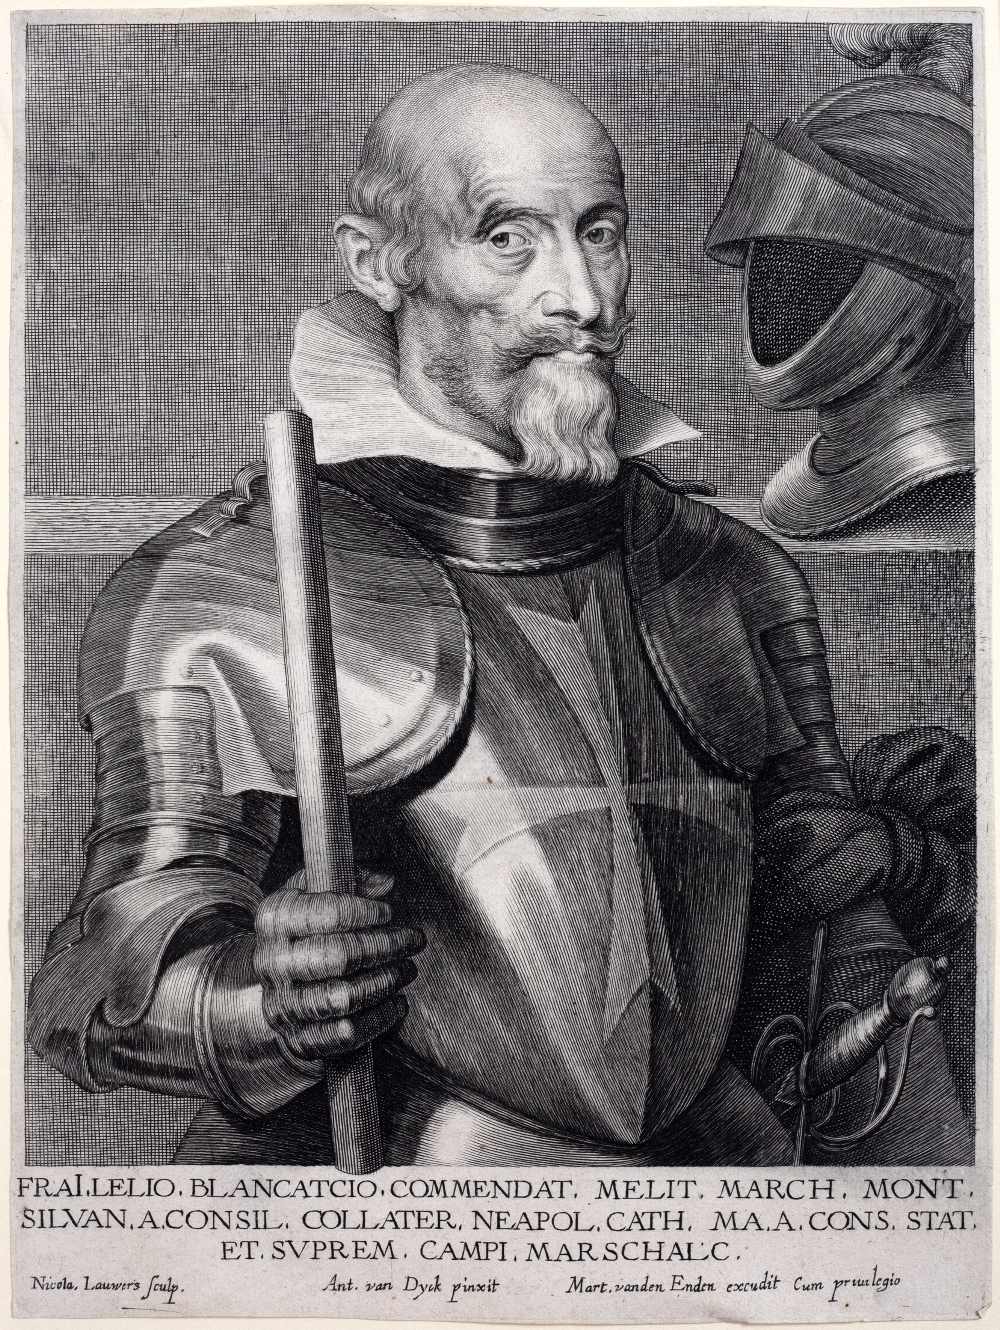 LAUWERS, Nicolaes (1600-1652) after ANTHONY VAN DYCK 'Fra Leilo Blancatcio' Commander of Malta,